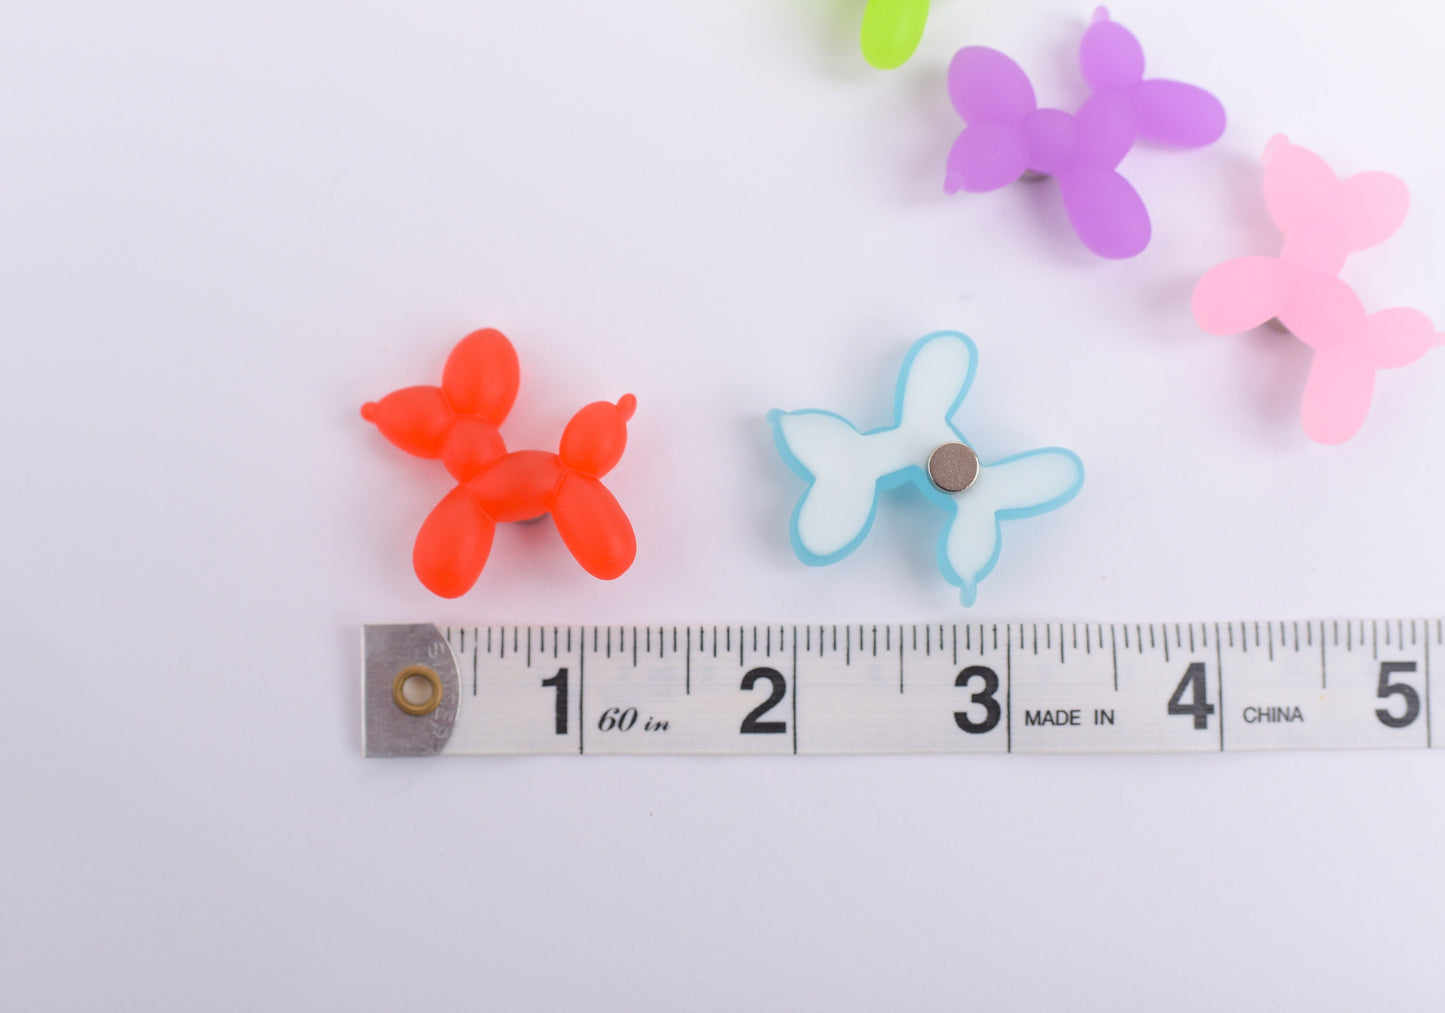 Balloon Animal Dog Magnets- Set of 6